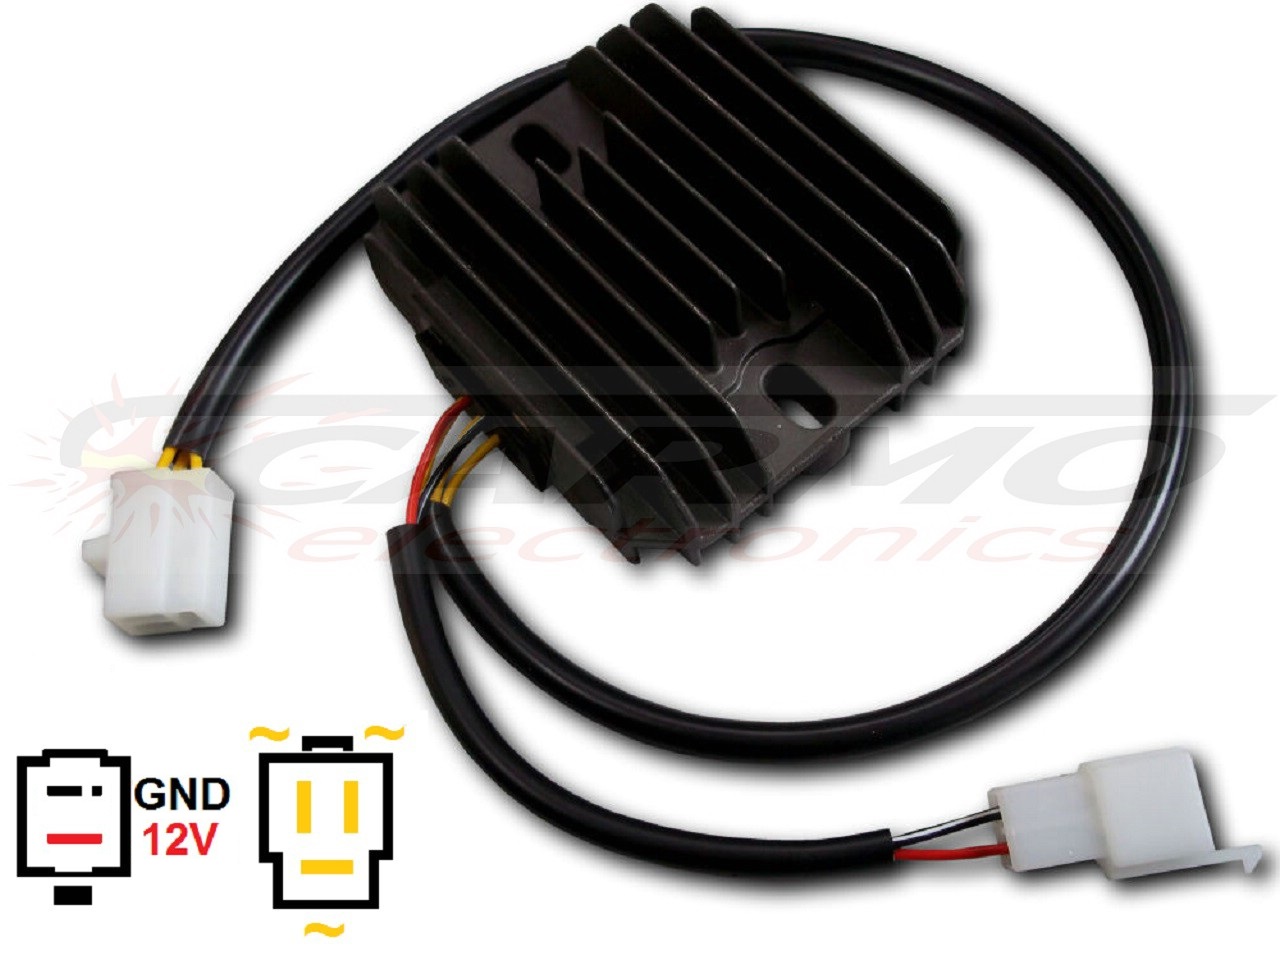 CARR5601 KTM MOSFET Voltage regulator rectifier - Clique na Imagem para Fechar